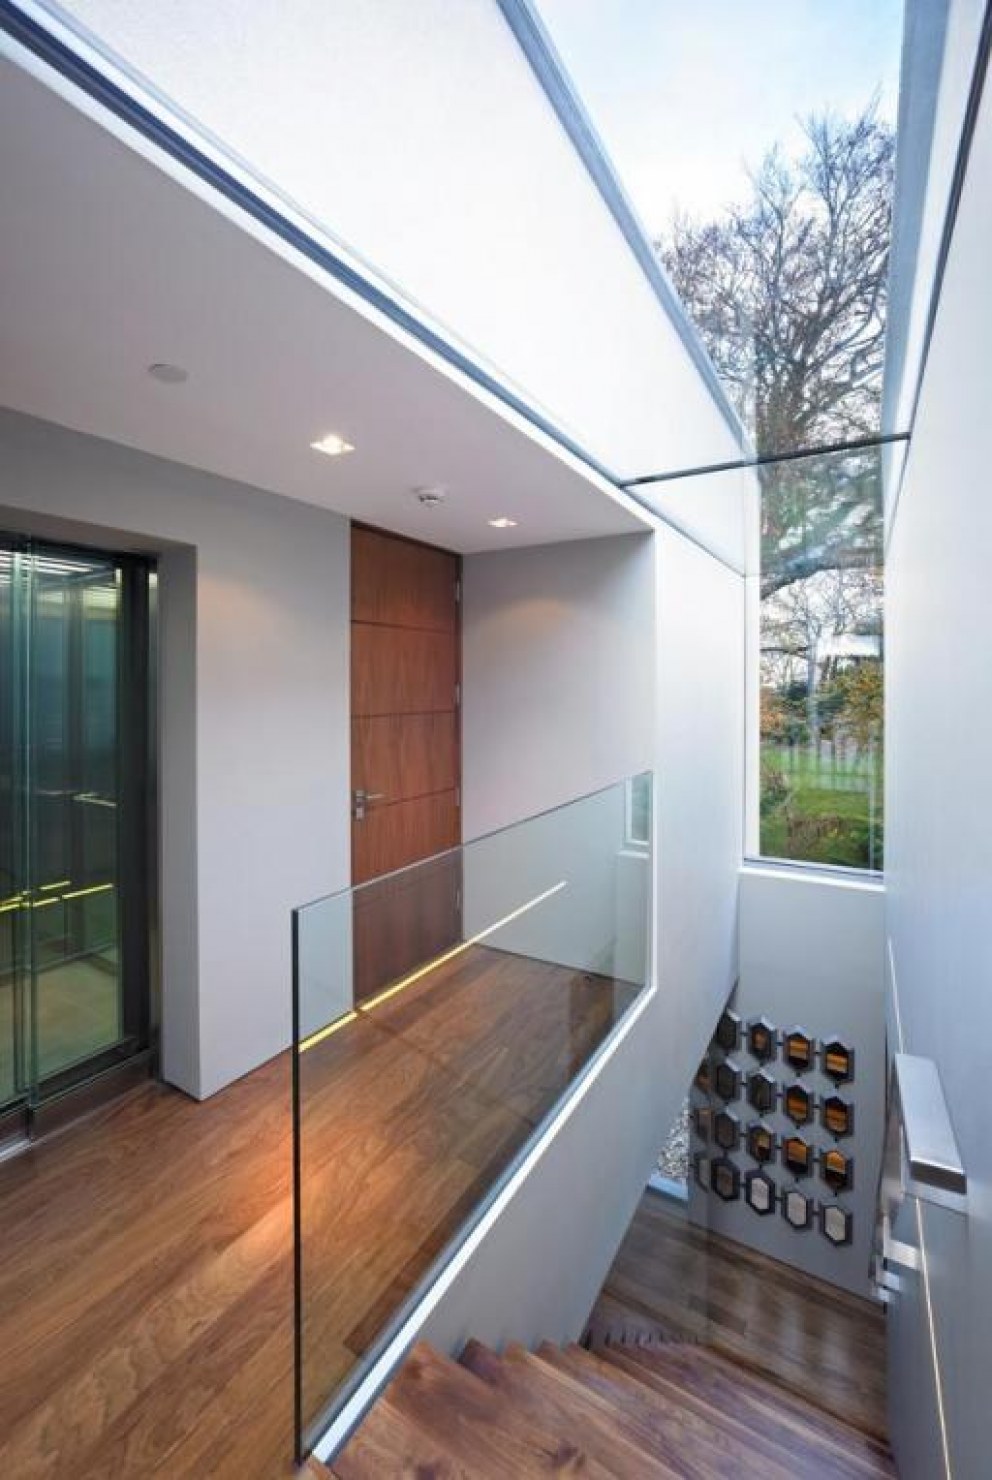 Award winning new build in Glasgow | Upper hallway | Interior Designers